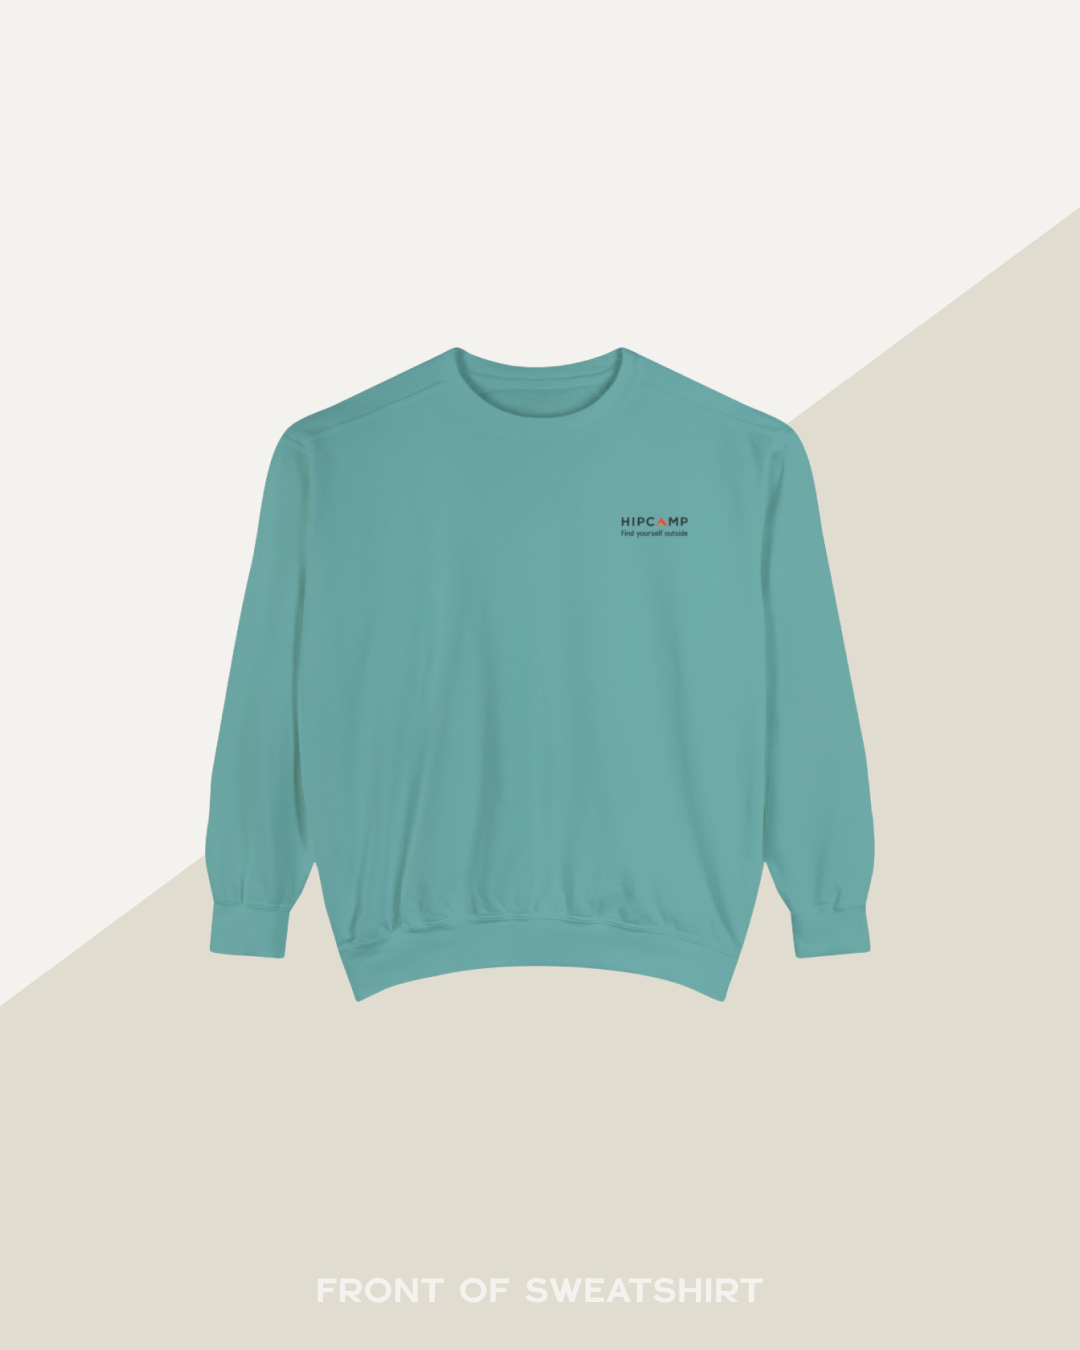 Hipcampin' supplies sweatshirt (Seafoam)